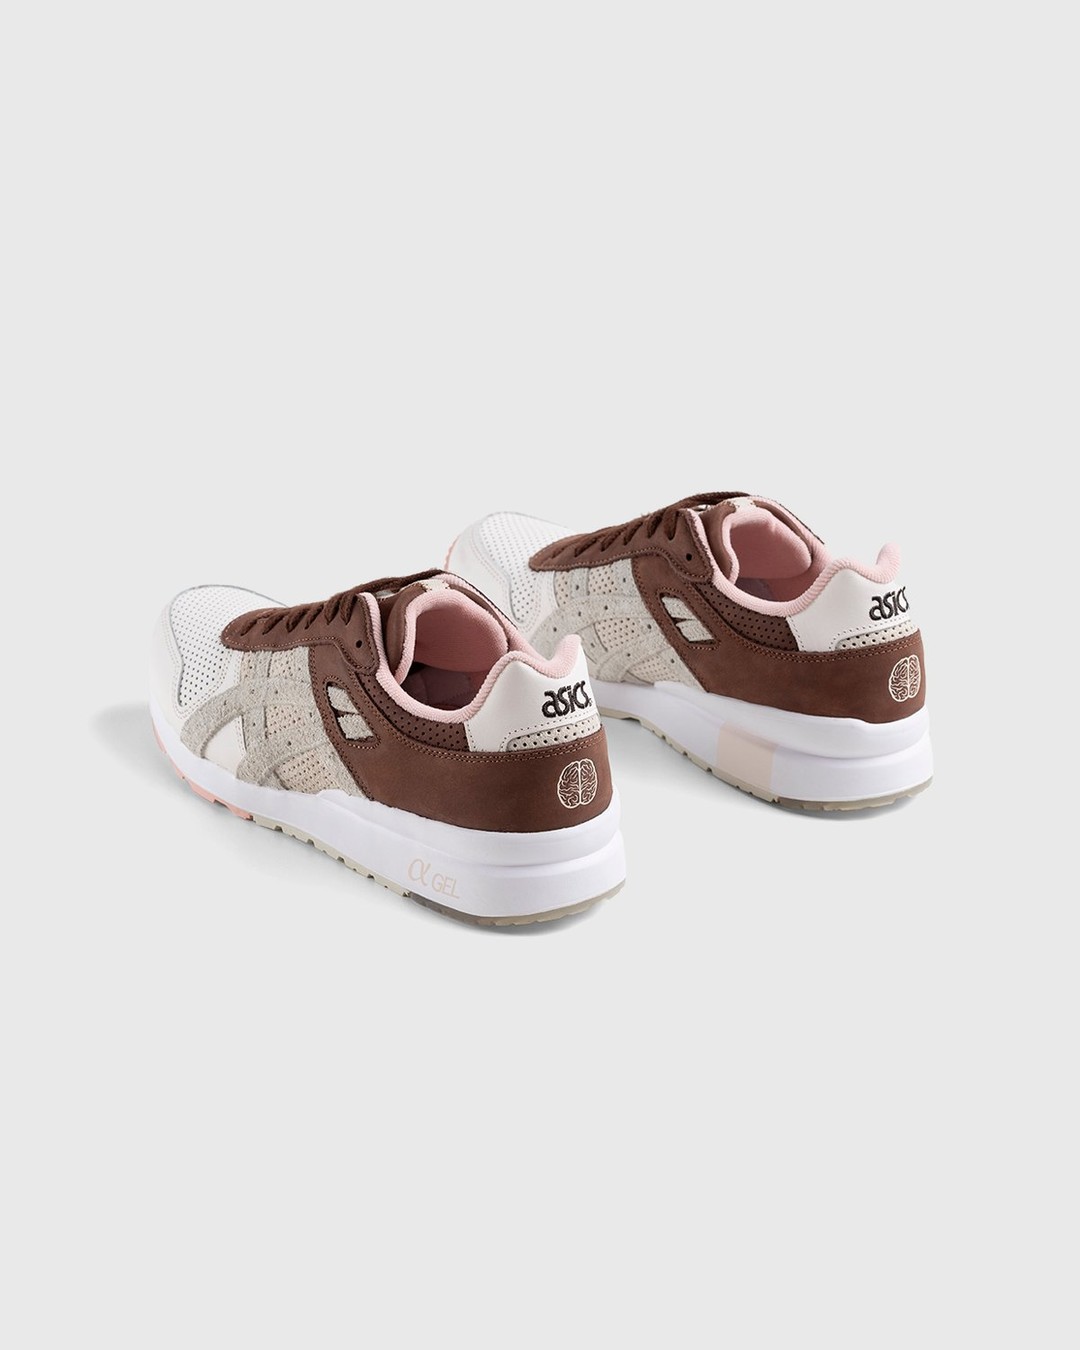 asics x Afew – GT-II Blush/Chocolate Brown - Low Top Sneakers - Pink - Image 4